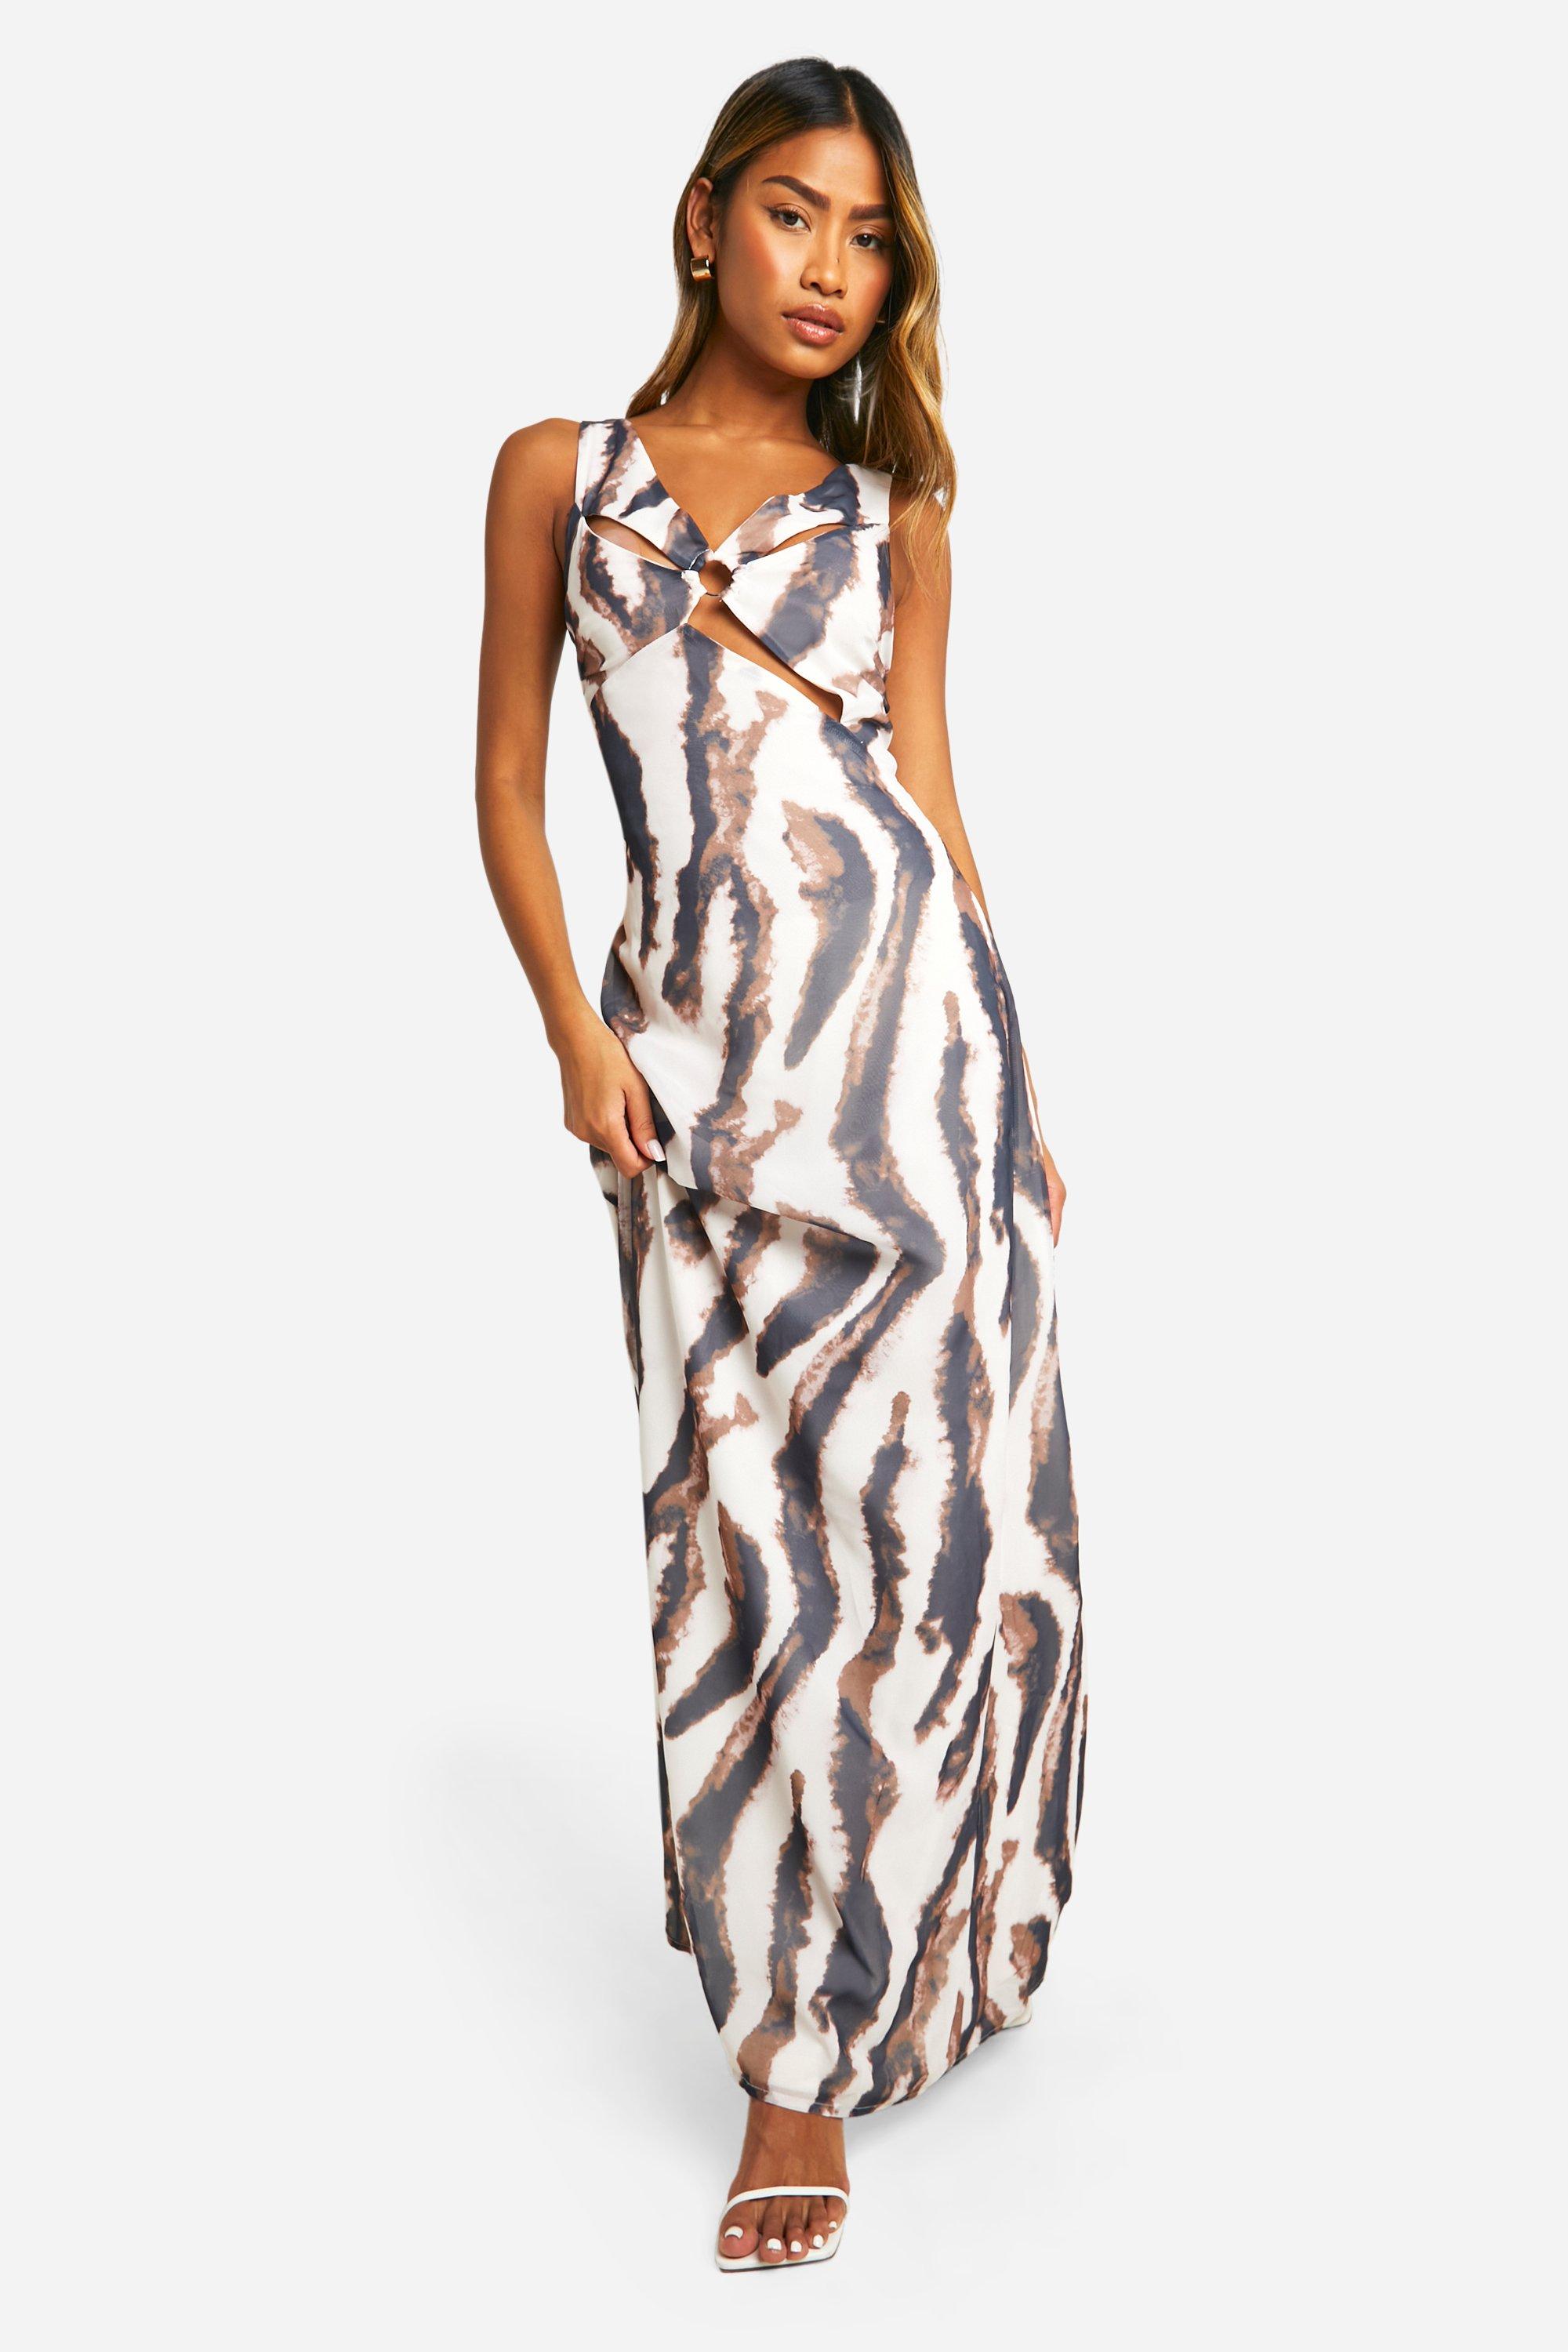 Image of Zebra Chiffon Cut Out Maxi Dress, Brown